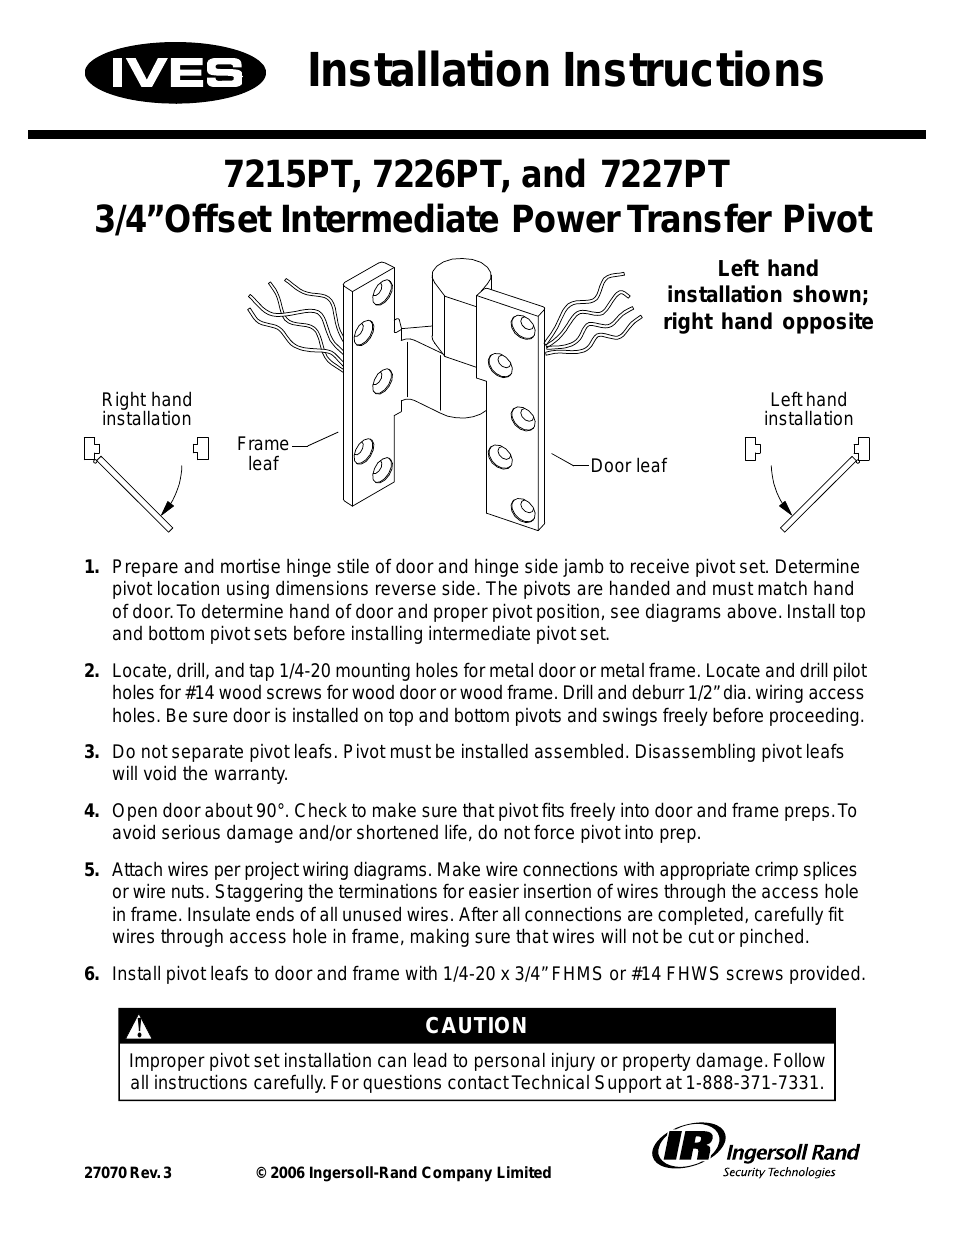 Offset Intermediate Power Transfer Pivot 7227PT